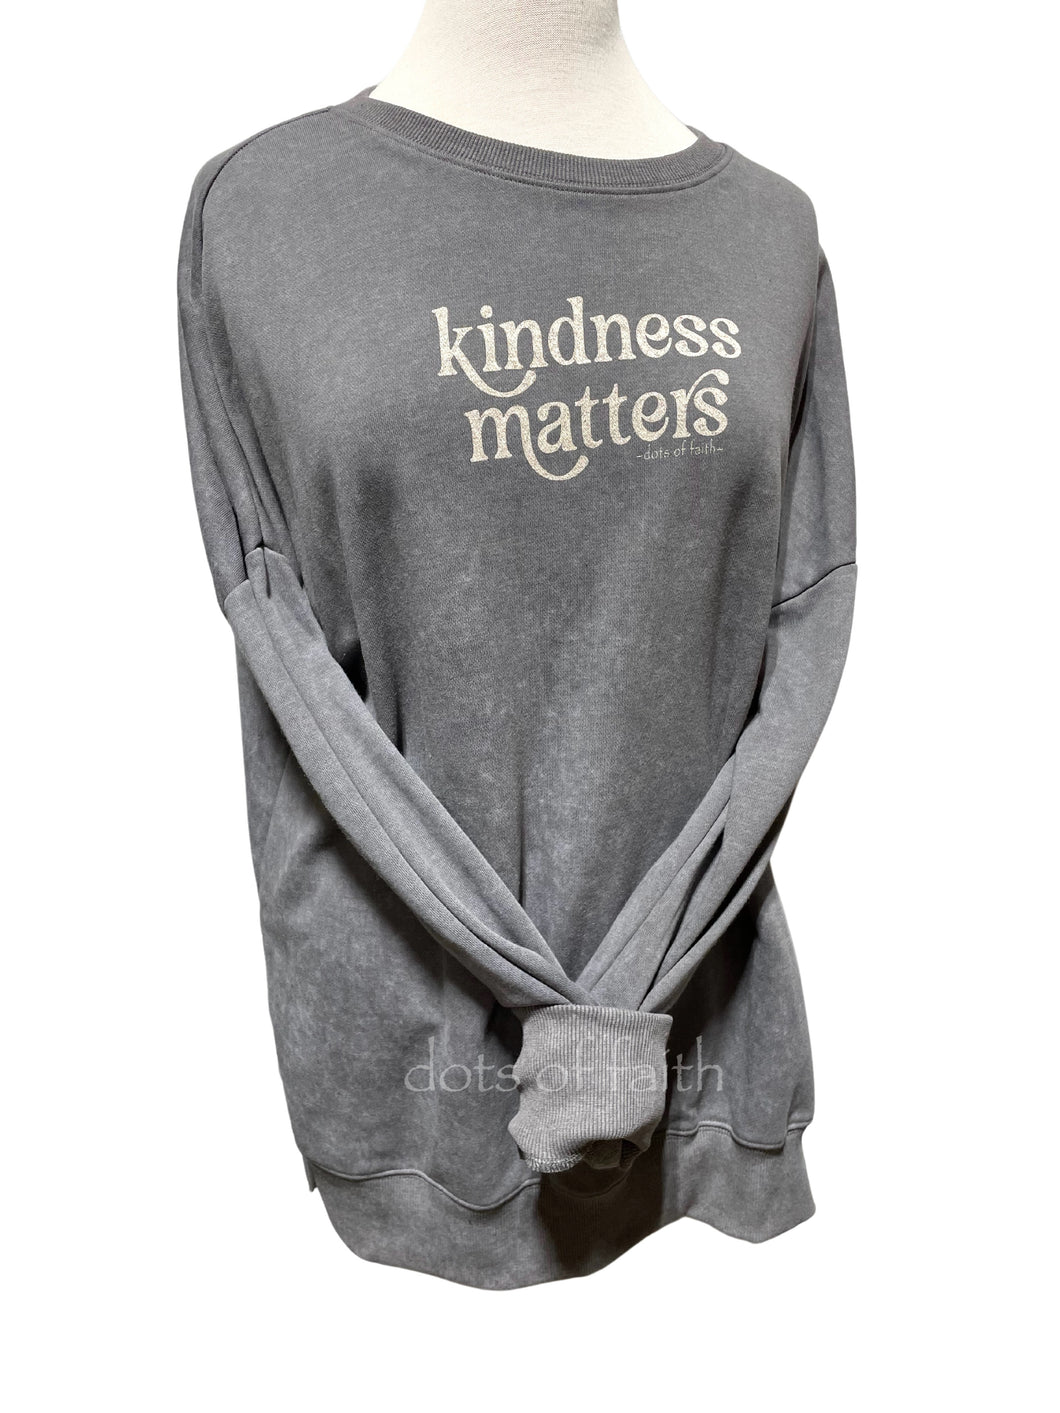 kindness matters gray long sleeve